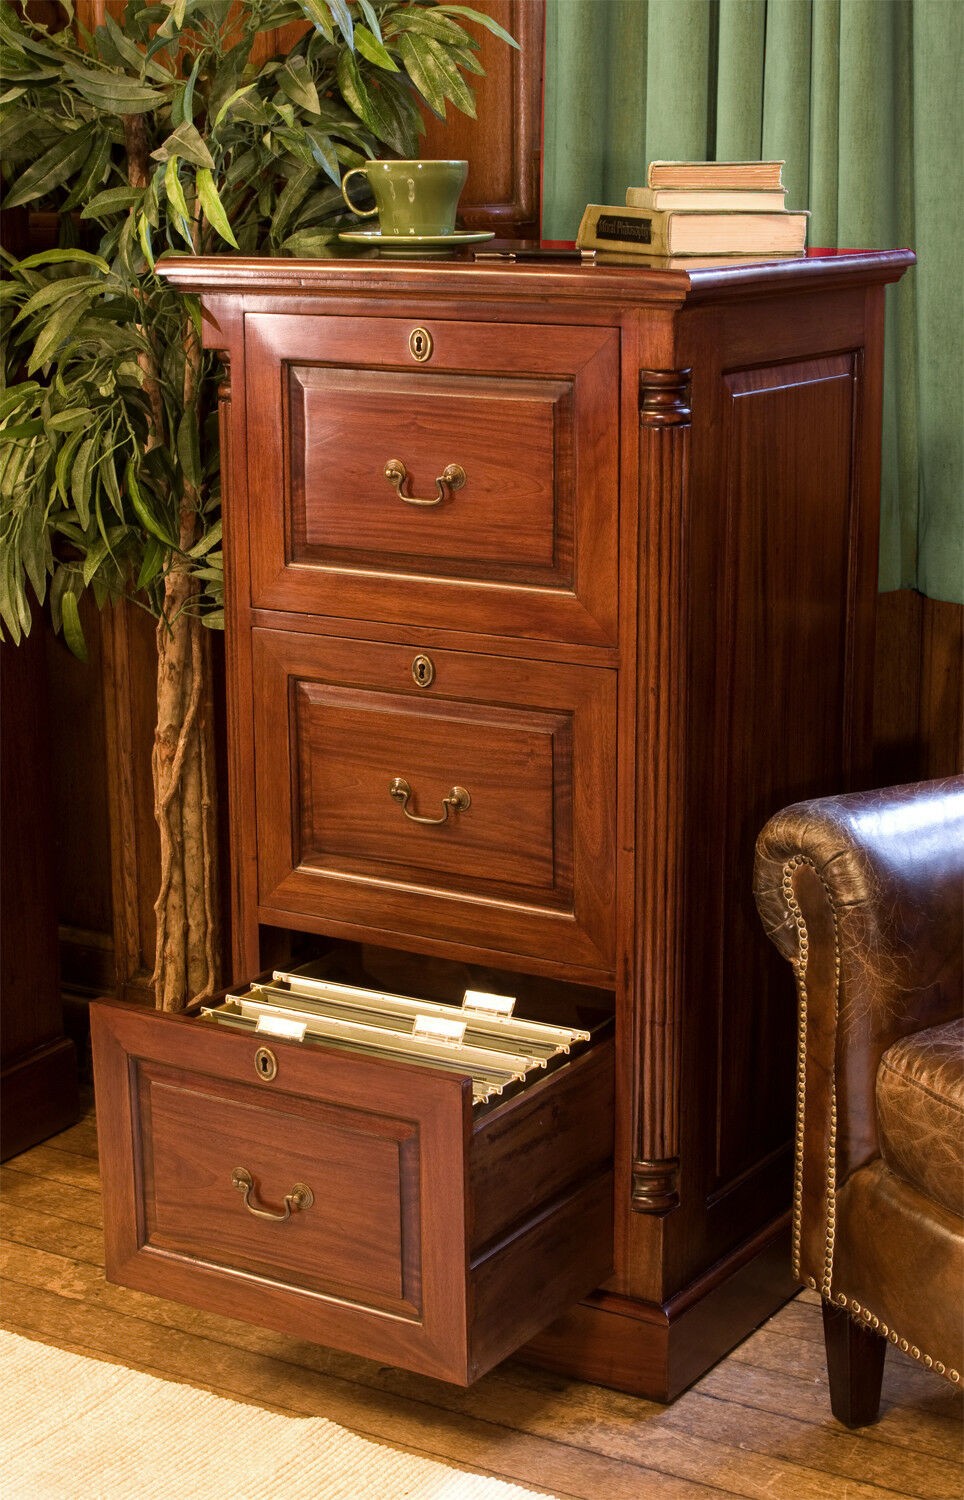 La roque dark wood filing cabinet 3 drawers storage solid